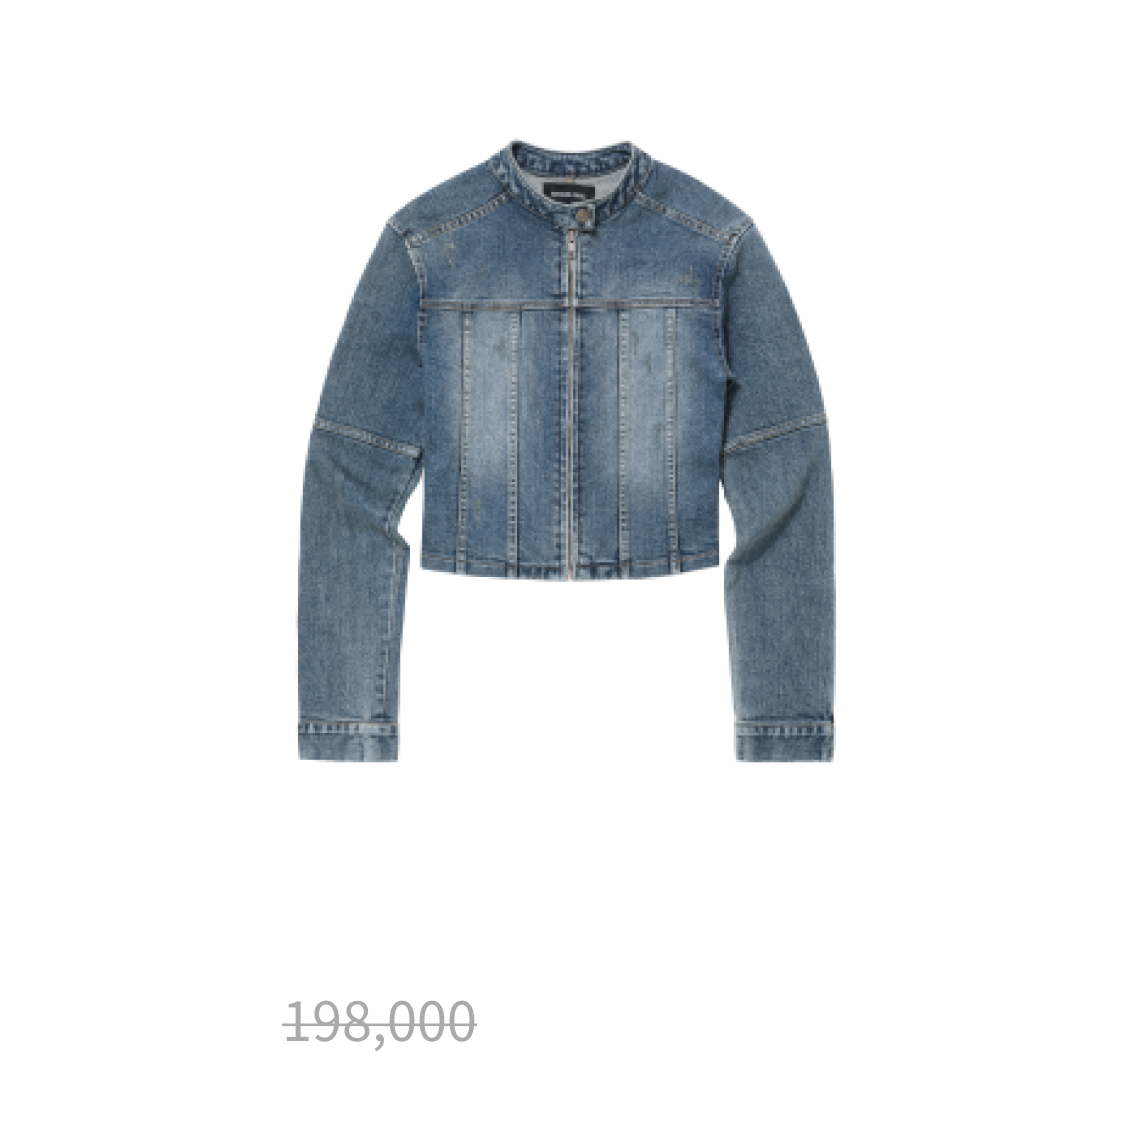 Tin slim denim biker jacket - INDIGO